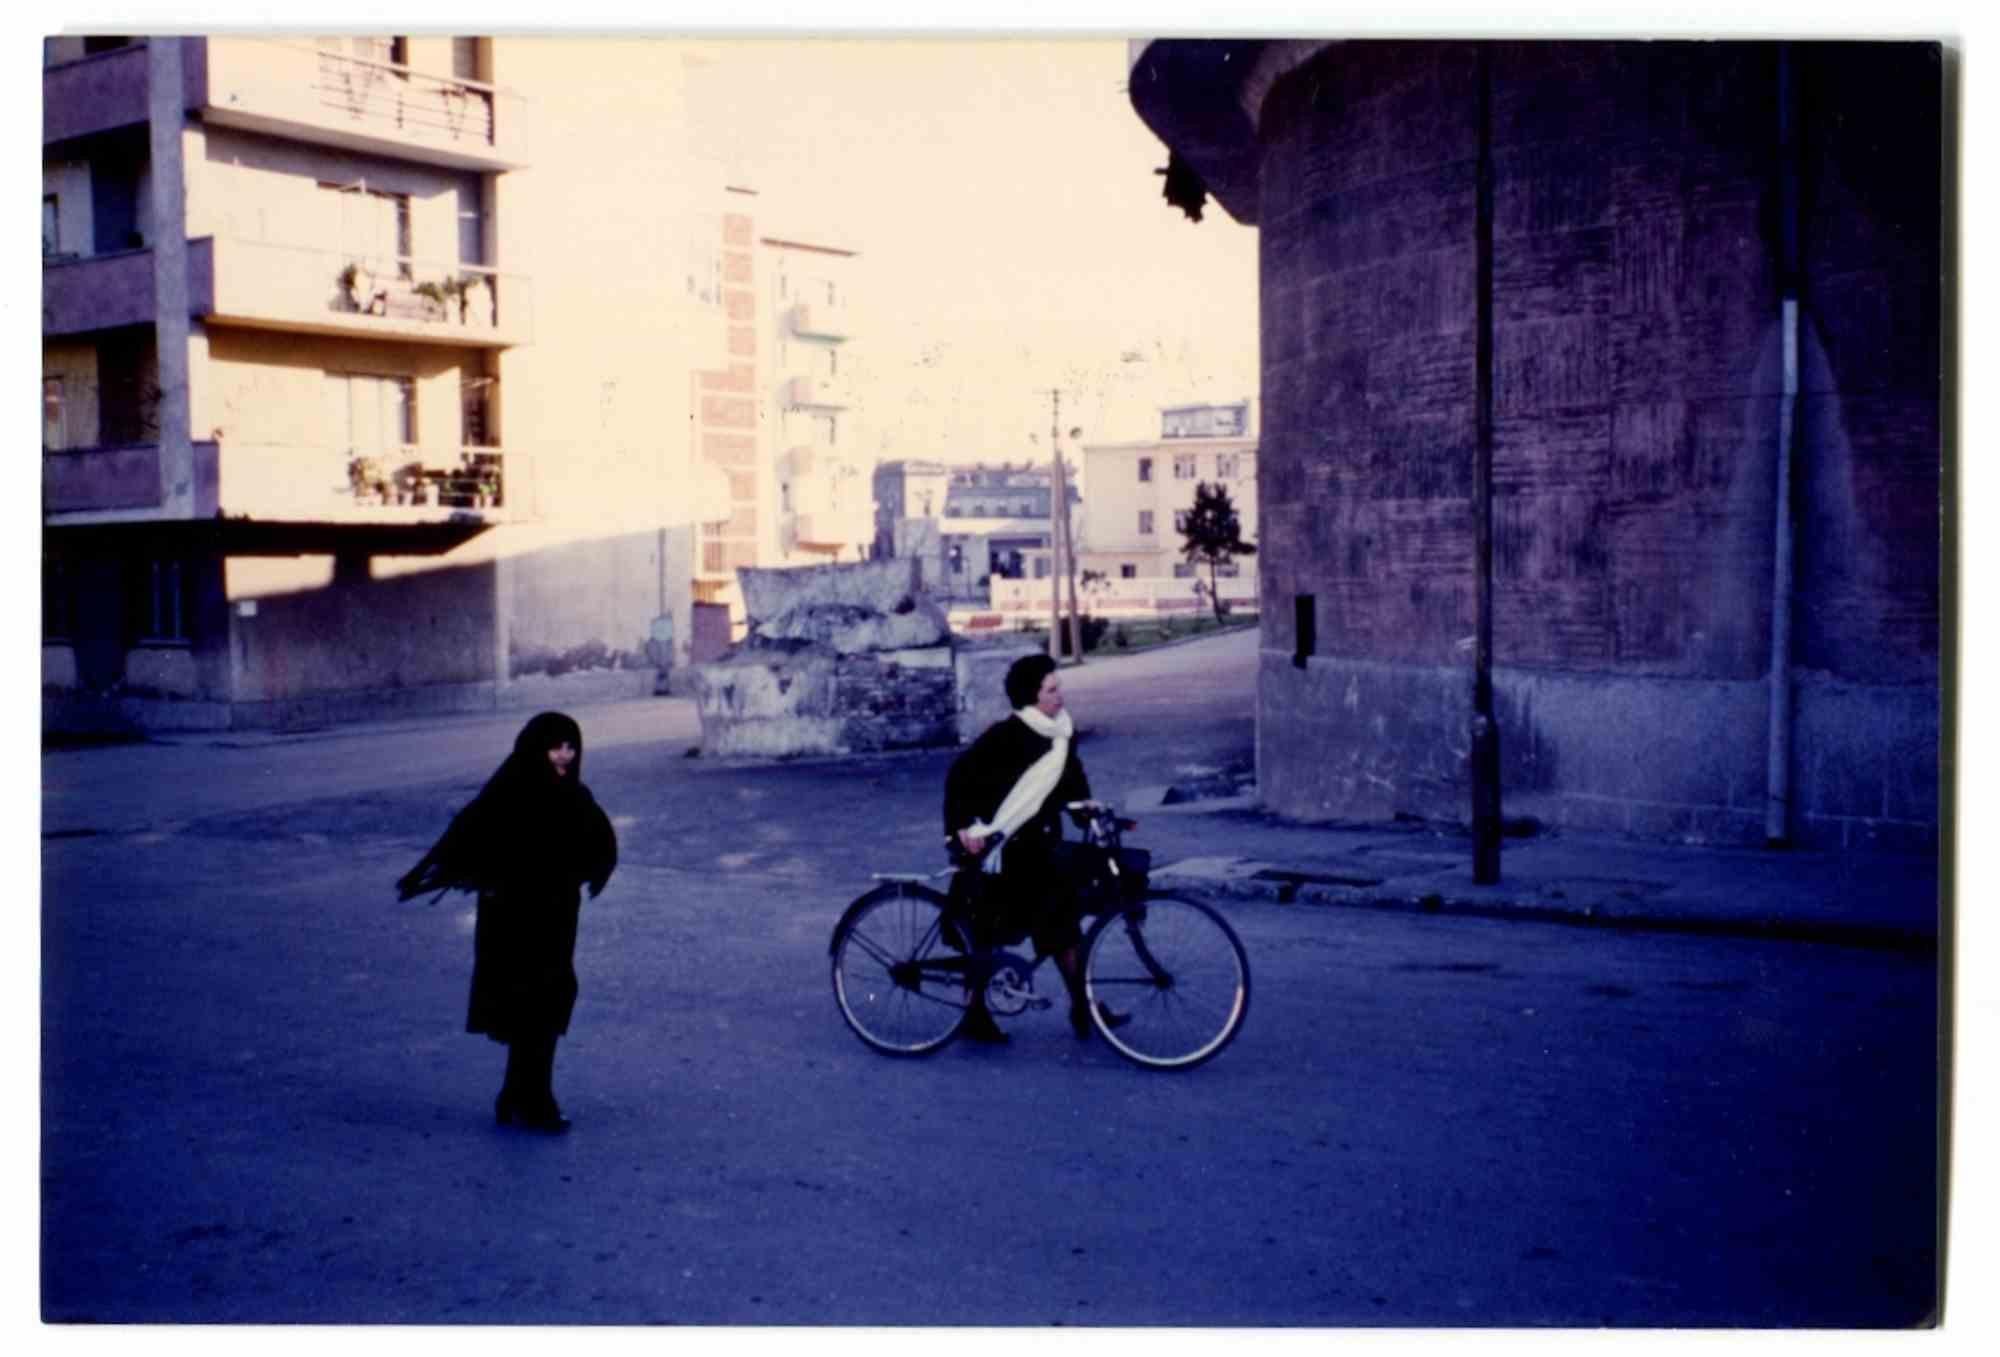 Reportage from Albania - Tirana - Photograph - Late 1970s